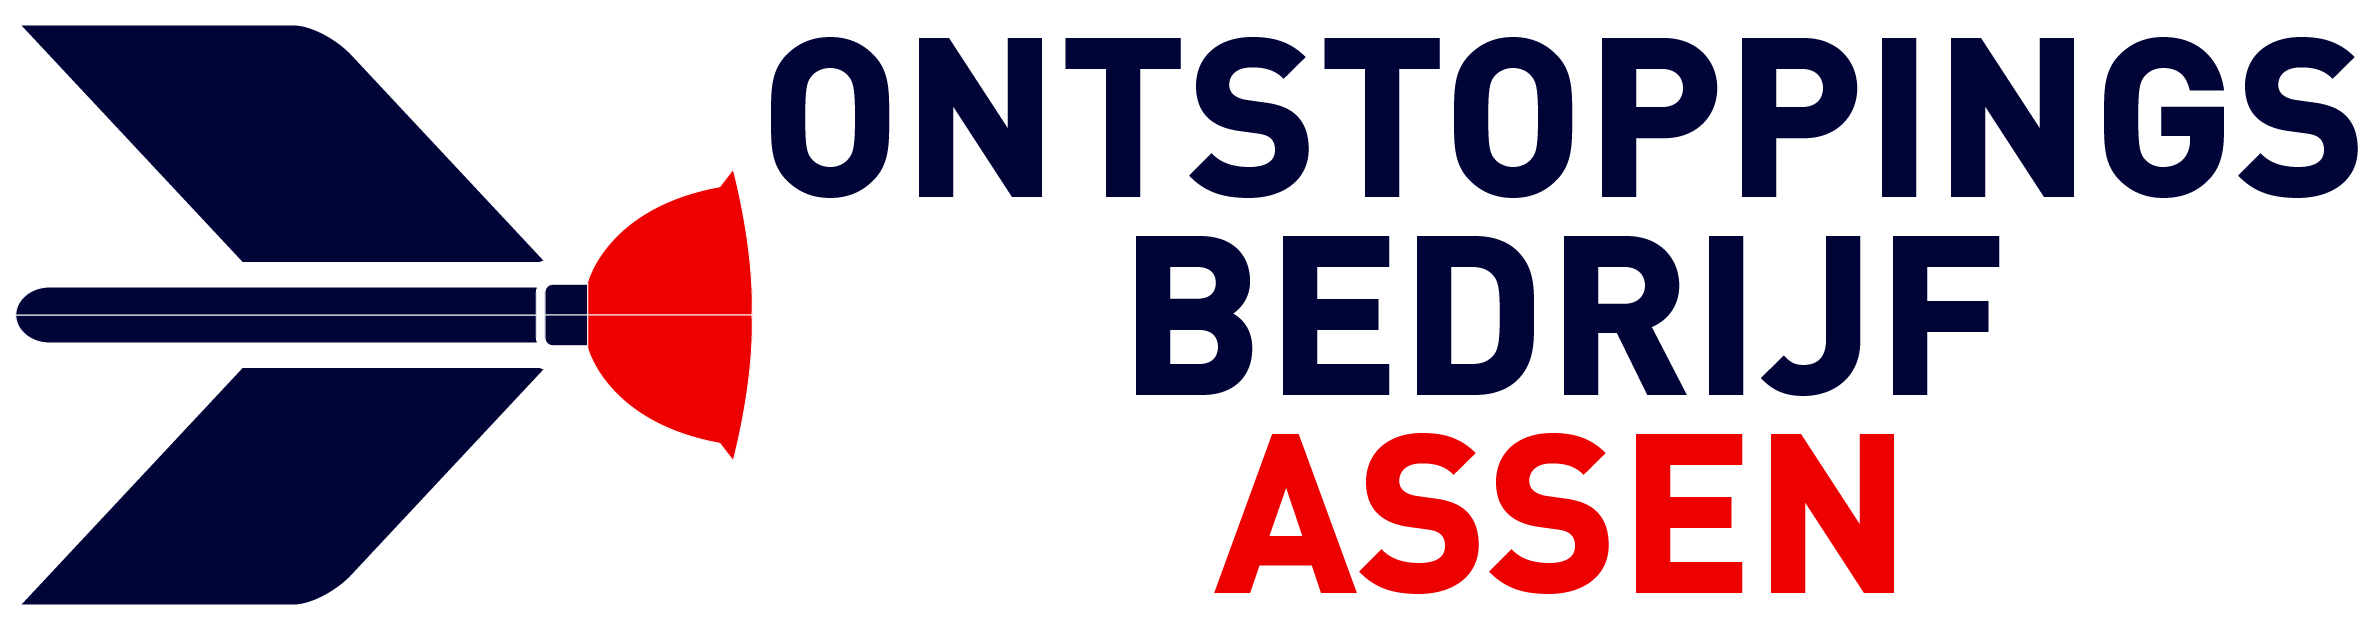 Ontstoppingsbedrijf Assen logo